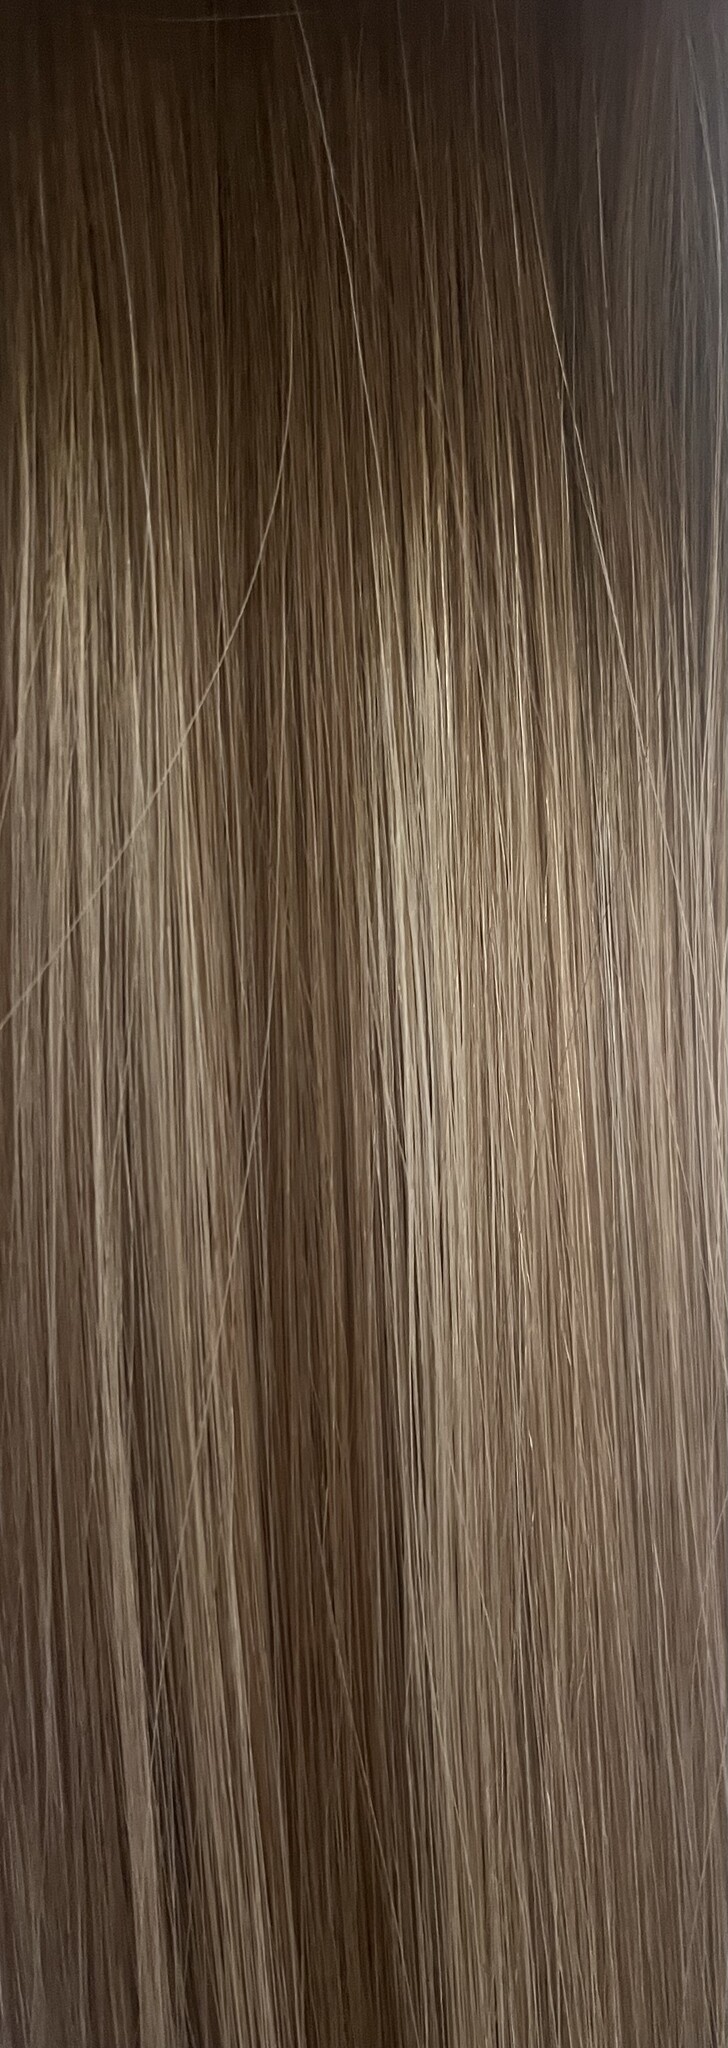 Ultra Thin Weft - Sahara Blonde-1